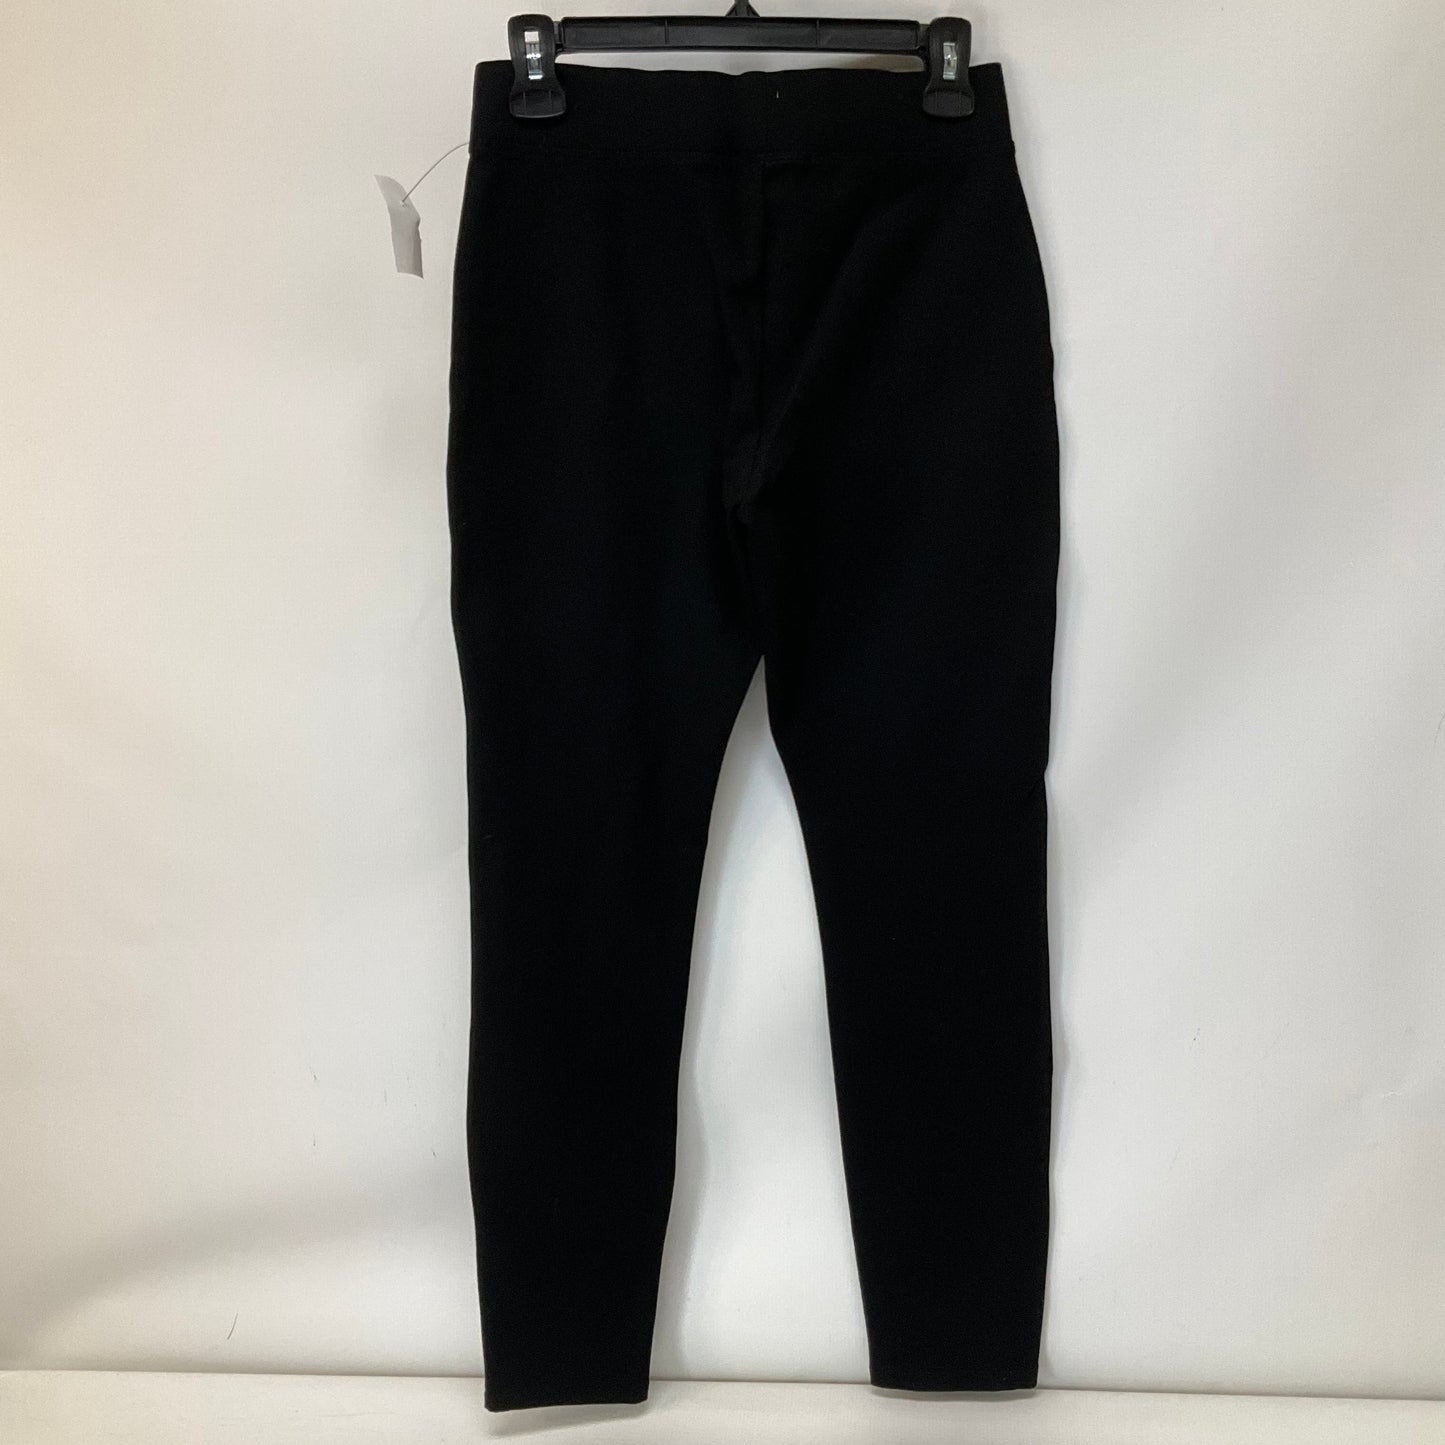 Black Pants Dress Cmb, Size S